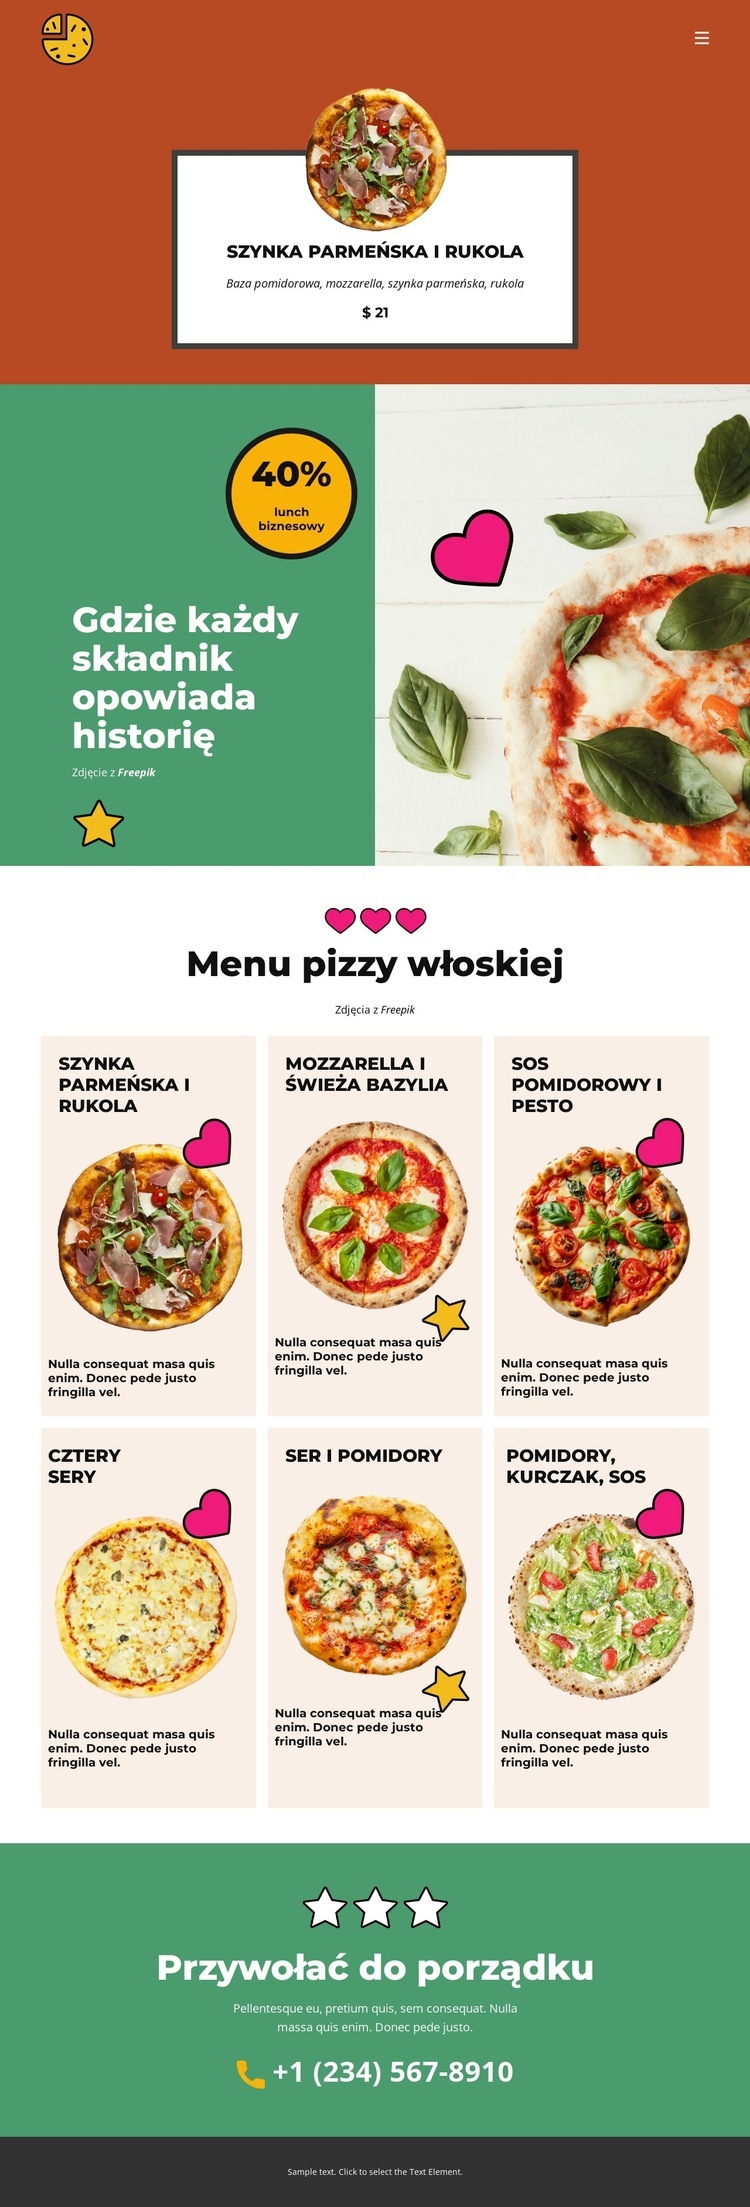 Fun Facts about Pizza Szablon jednej strony